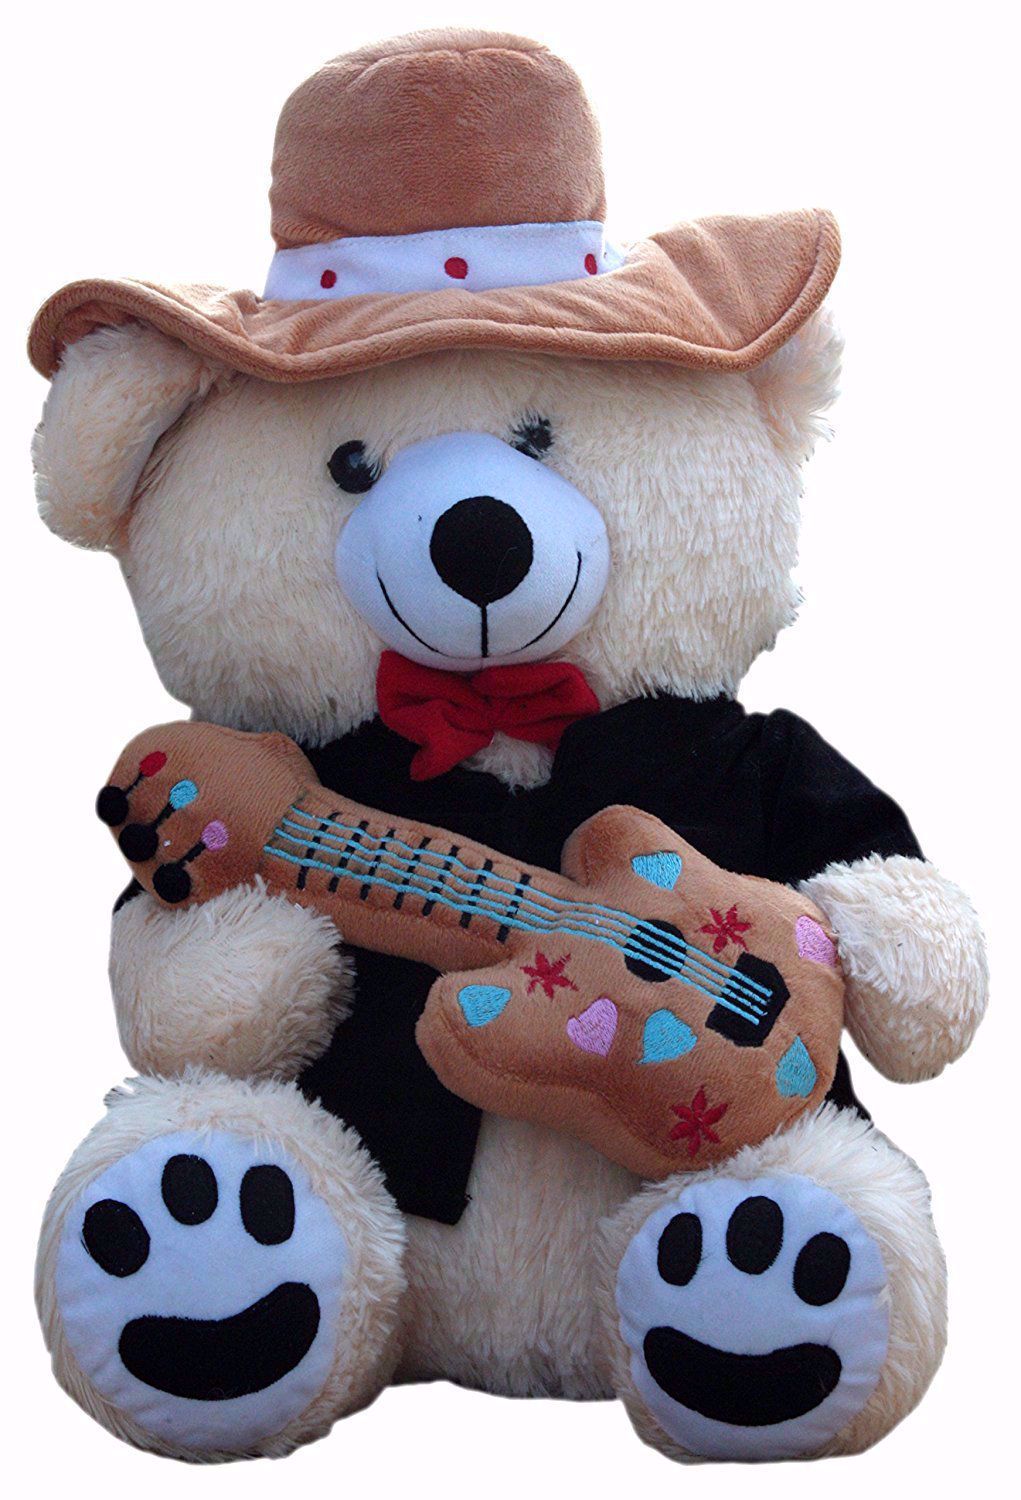 Rock star Teddy Bear | Rock star Teddy Bear Online | Teddy Bear ...